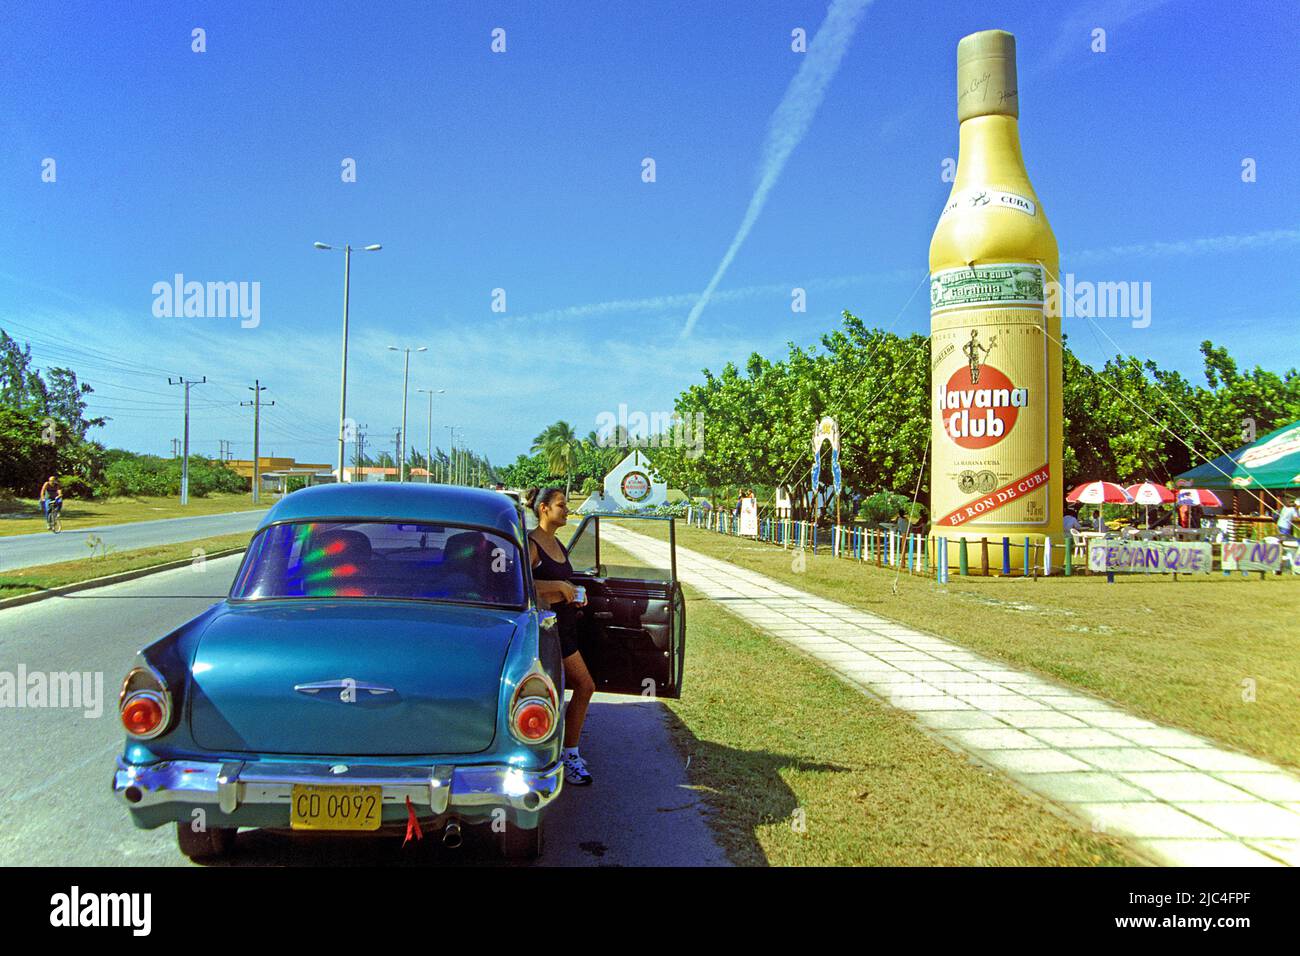 La ragazza cubana esce da un'auto d'epoca, bottiglia di rum Havana Club grande plastica, rum pubblicità a una Fiesta, Santa Lucia, Cuba, Caraibi Foto Stock